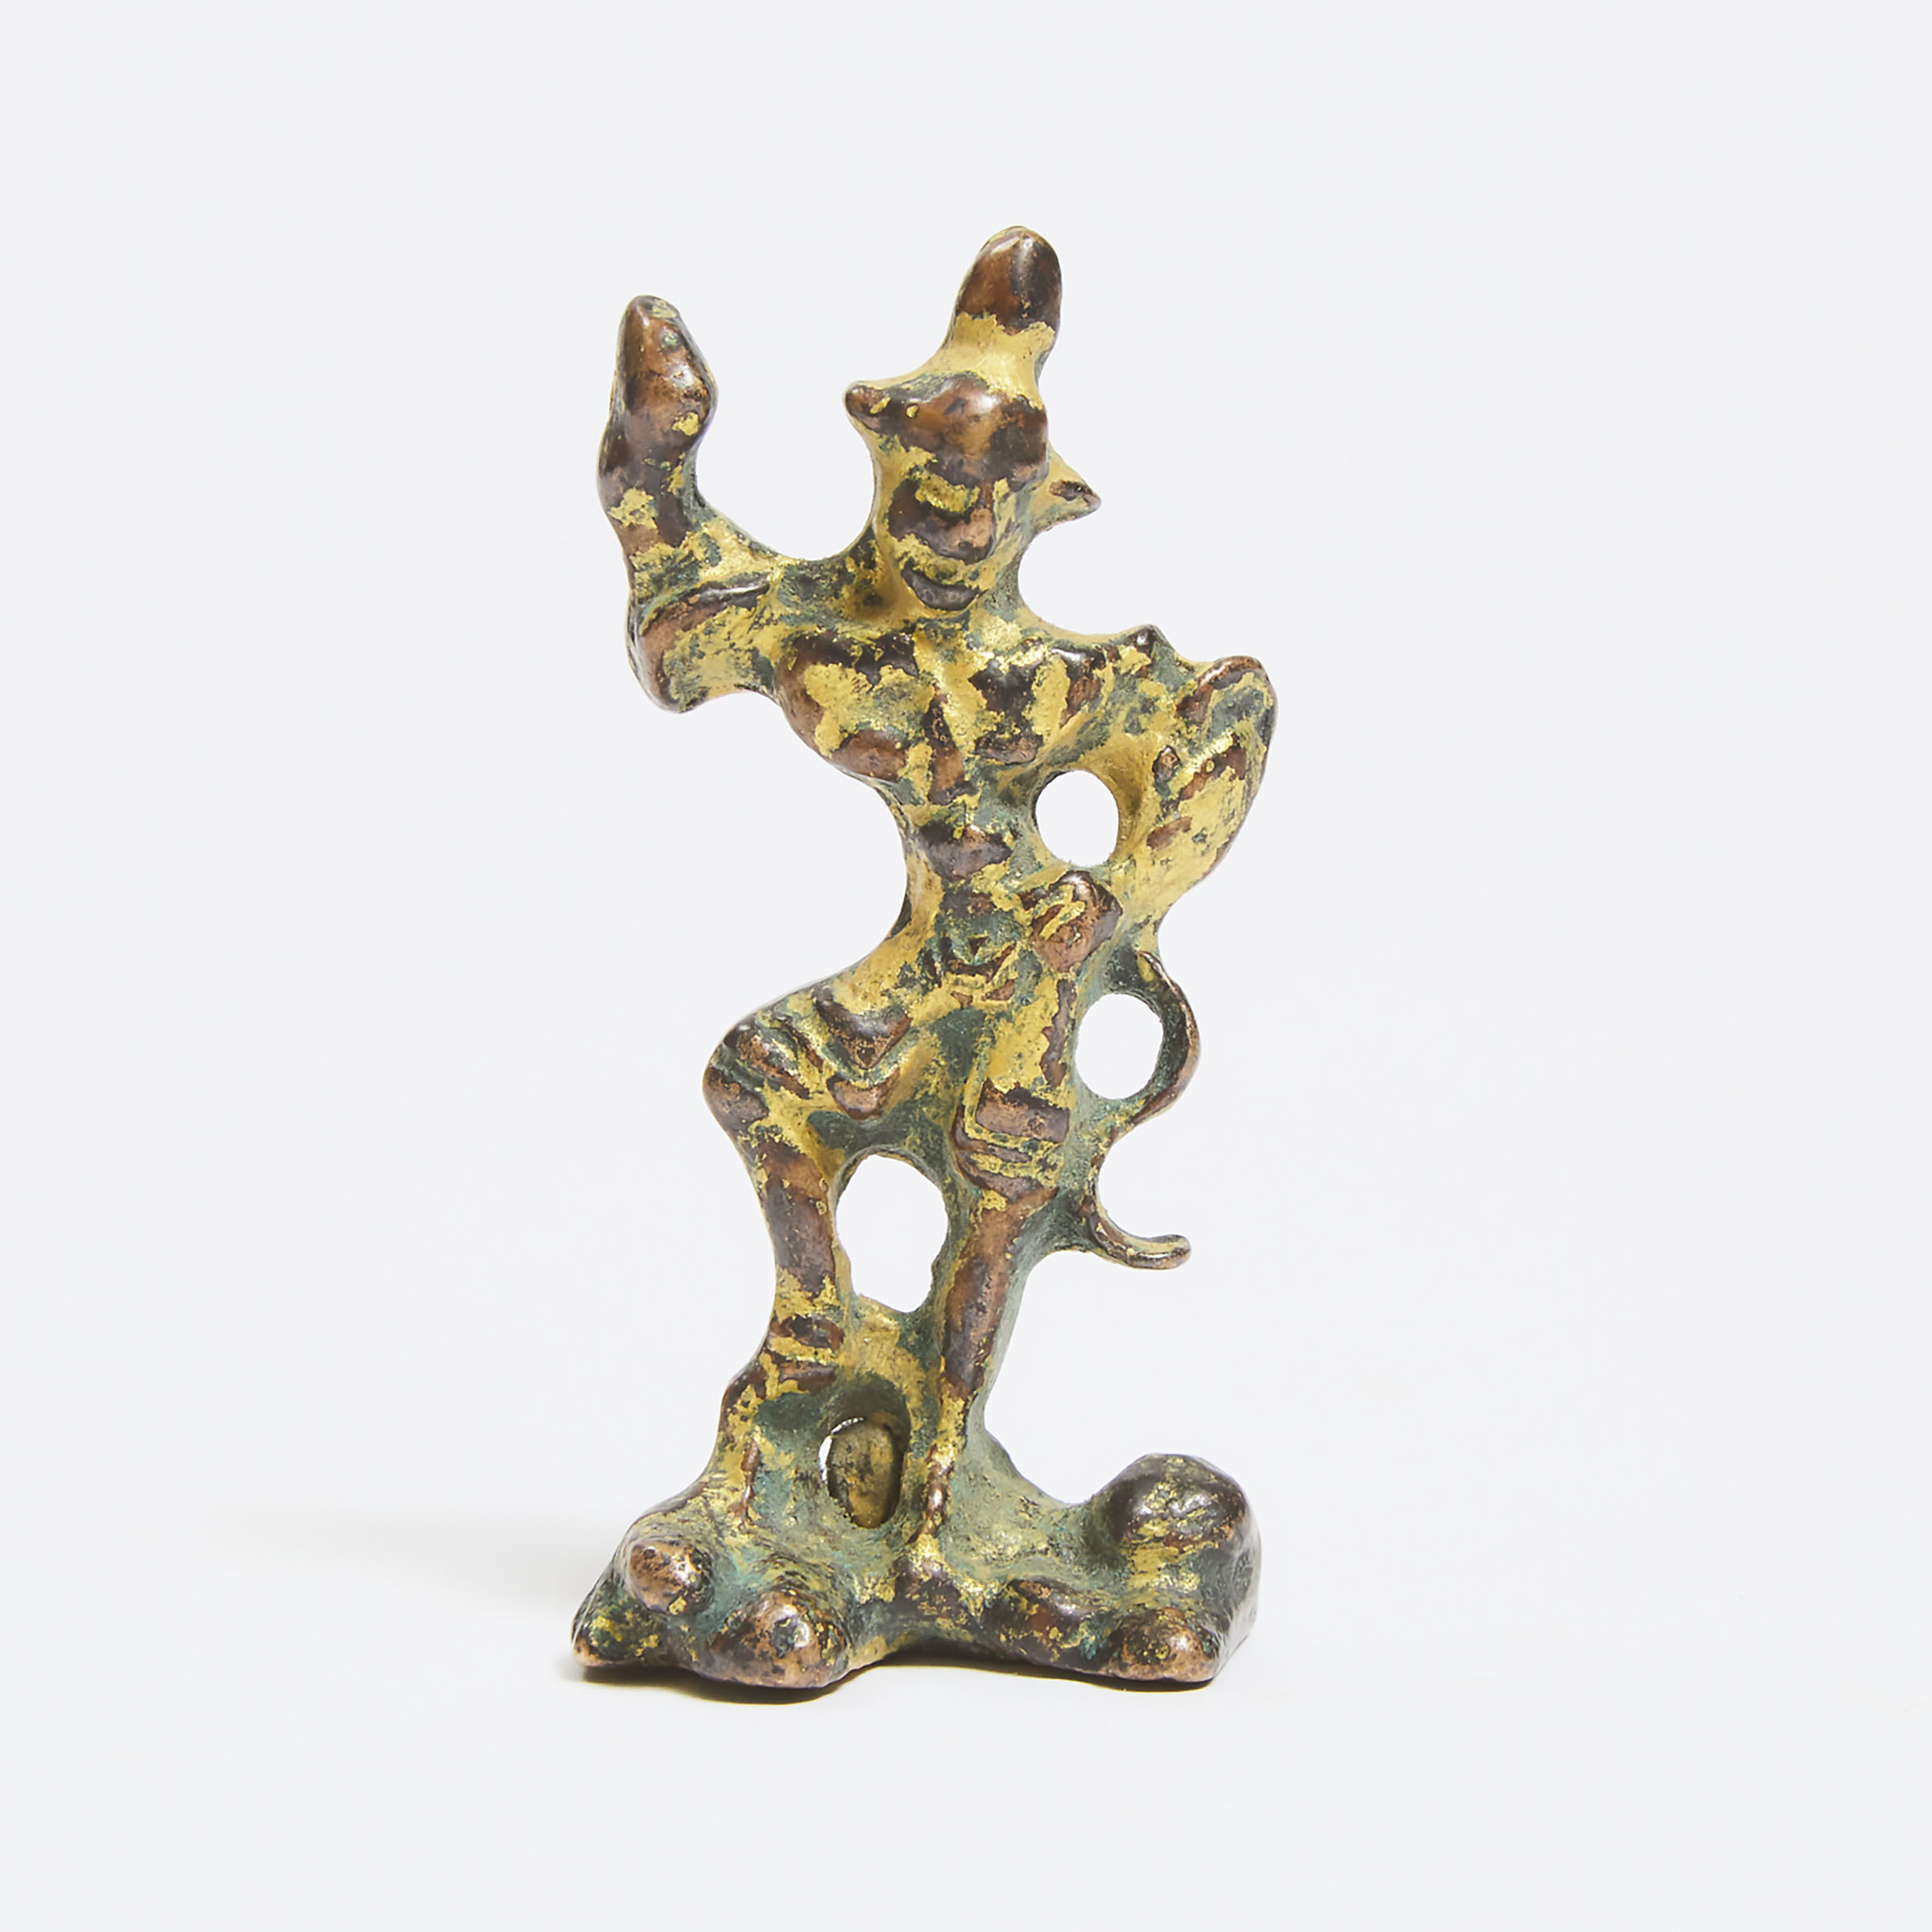 A Small Gilt Bronze Figure of a Lokapala, Possibly Tang Dynasty